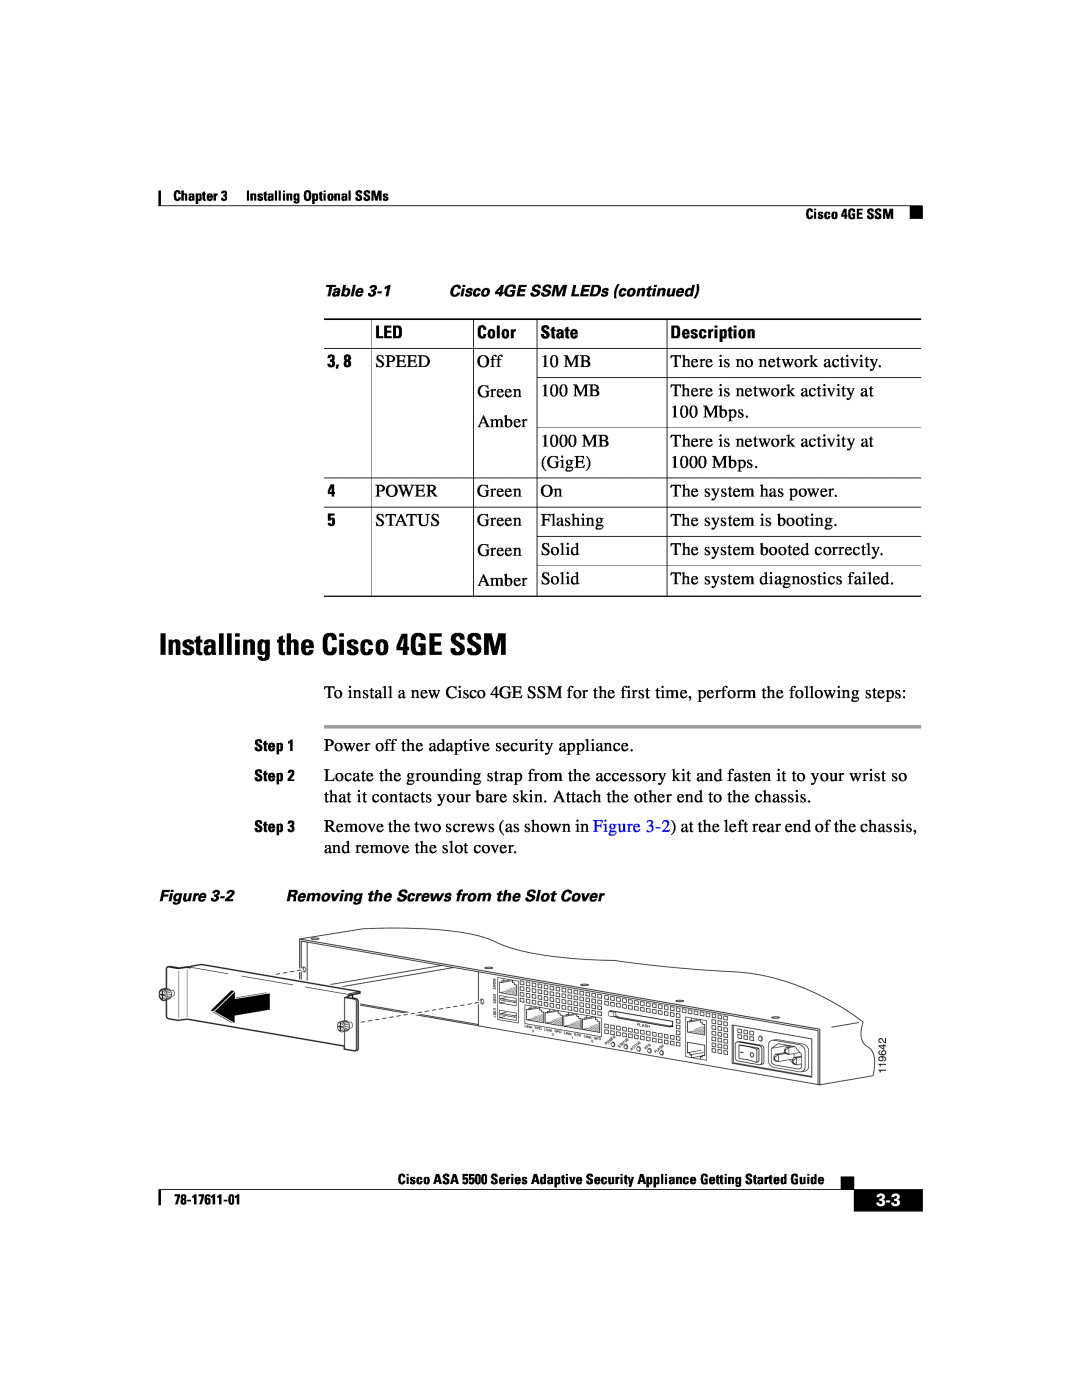 Cisco Systems ASA 5500 manual Installing the Cisco 4GE SSM, Color, State, Description 